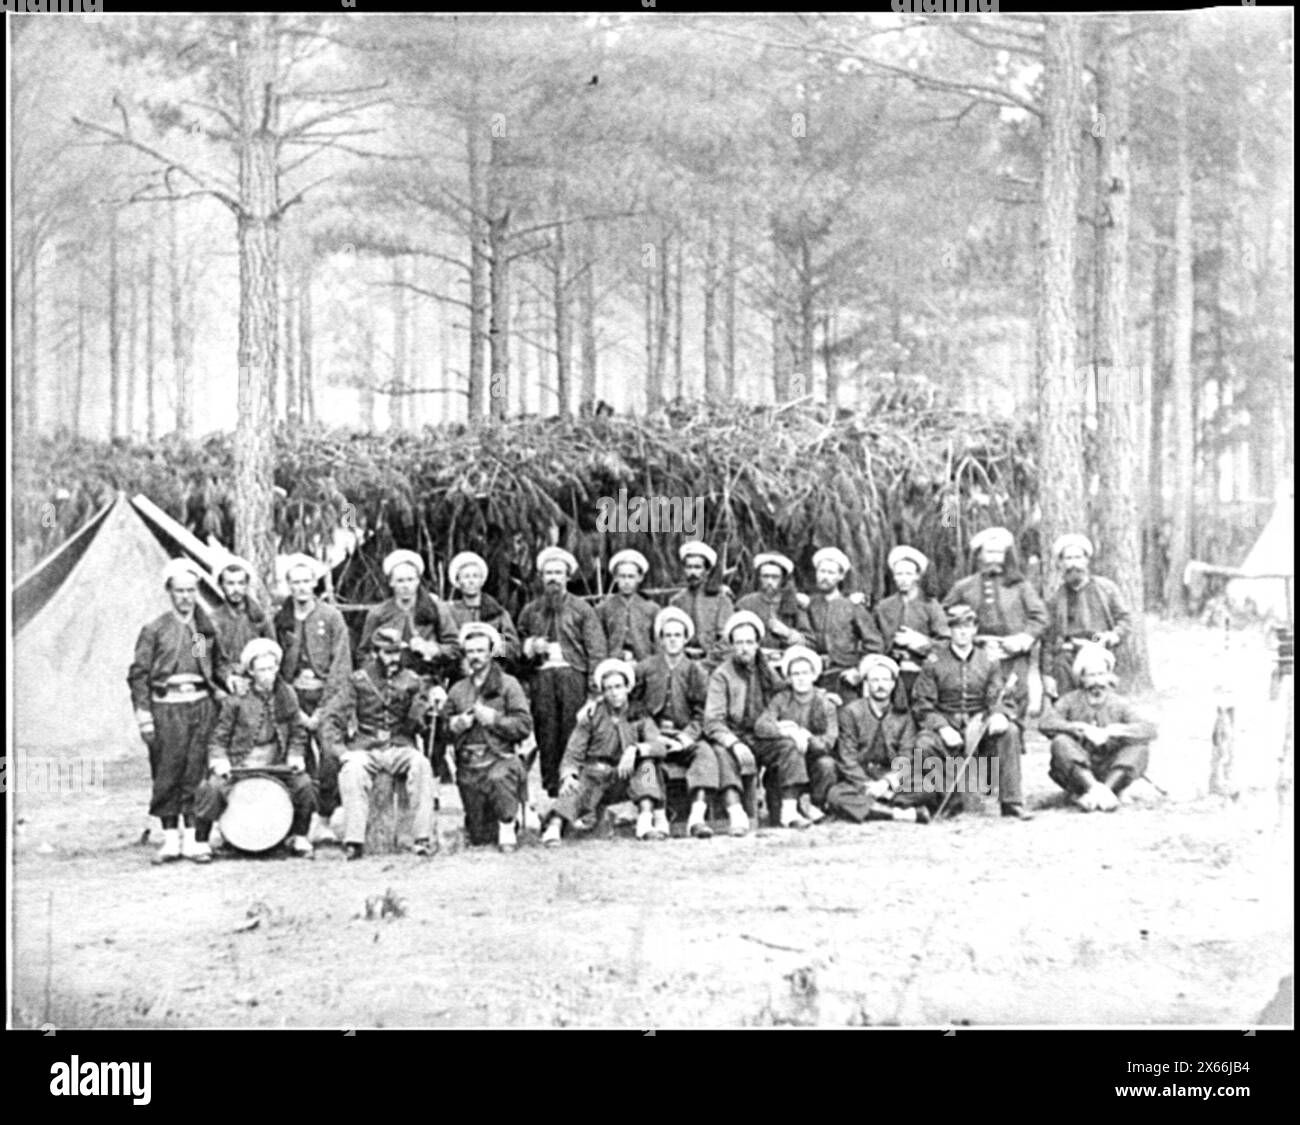 Petersburg, Va. Company H, 114th Pennsylvania Infantry (Zouaves), Civil War Photographs 1861-1865 Stock Photo